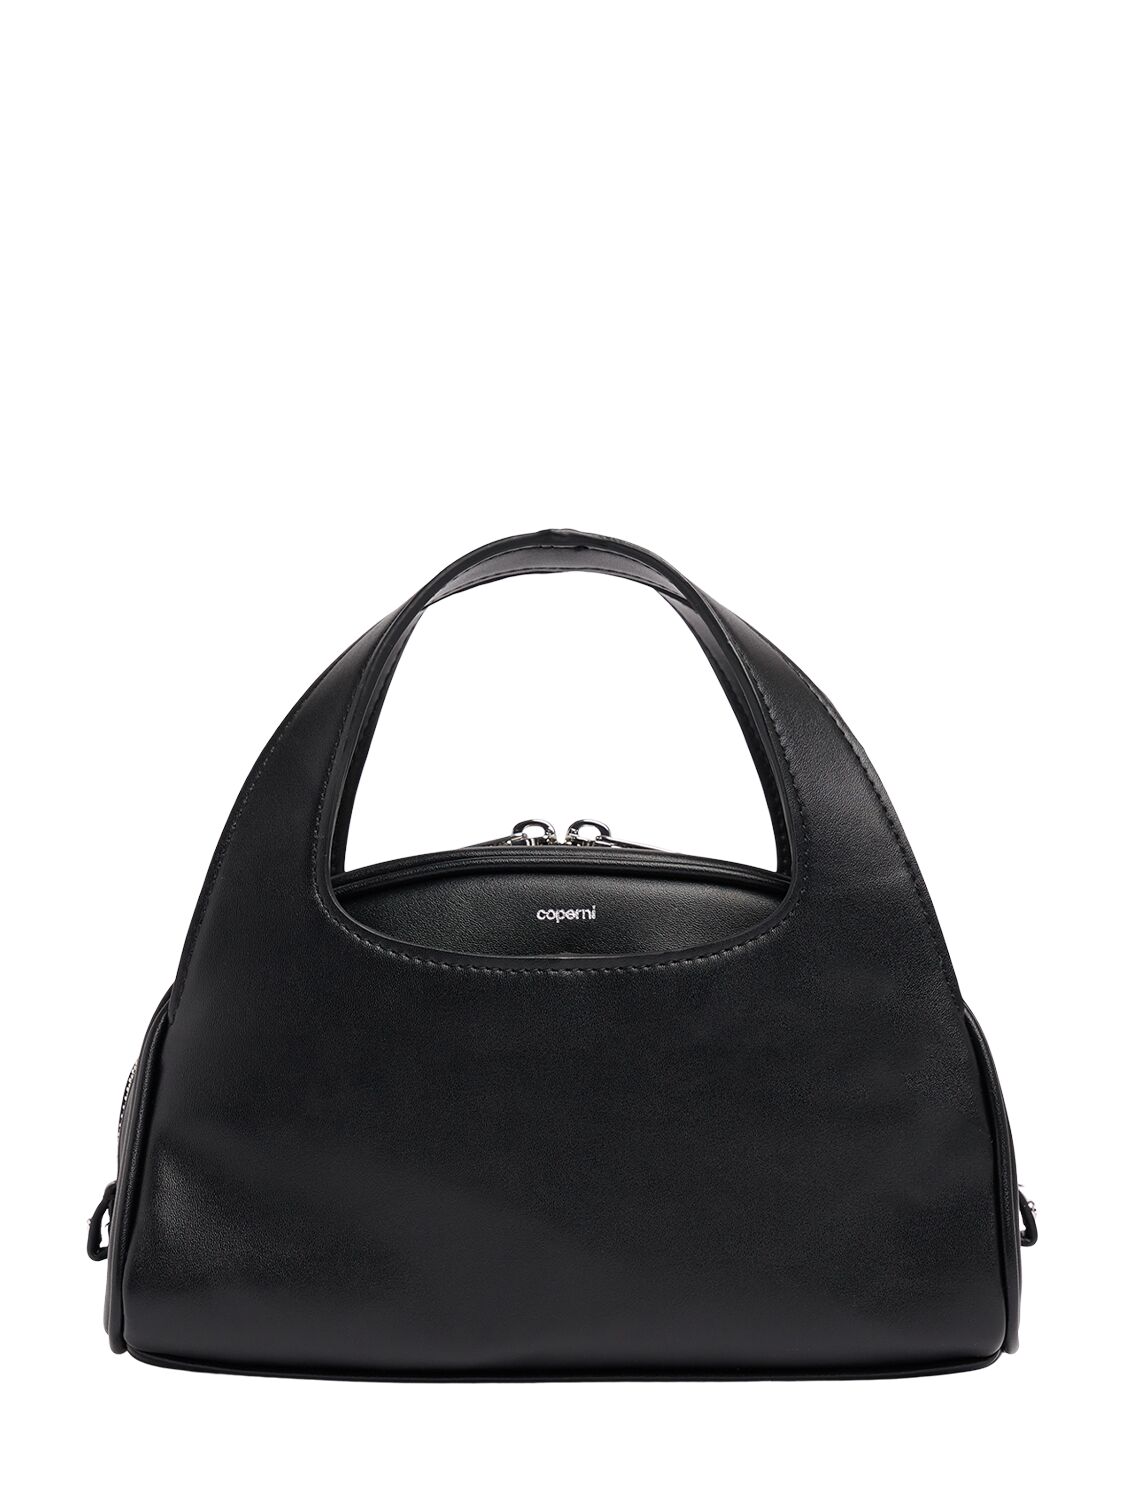 Coperni Medium Faux Leather Top Handle Bag In Black